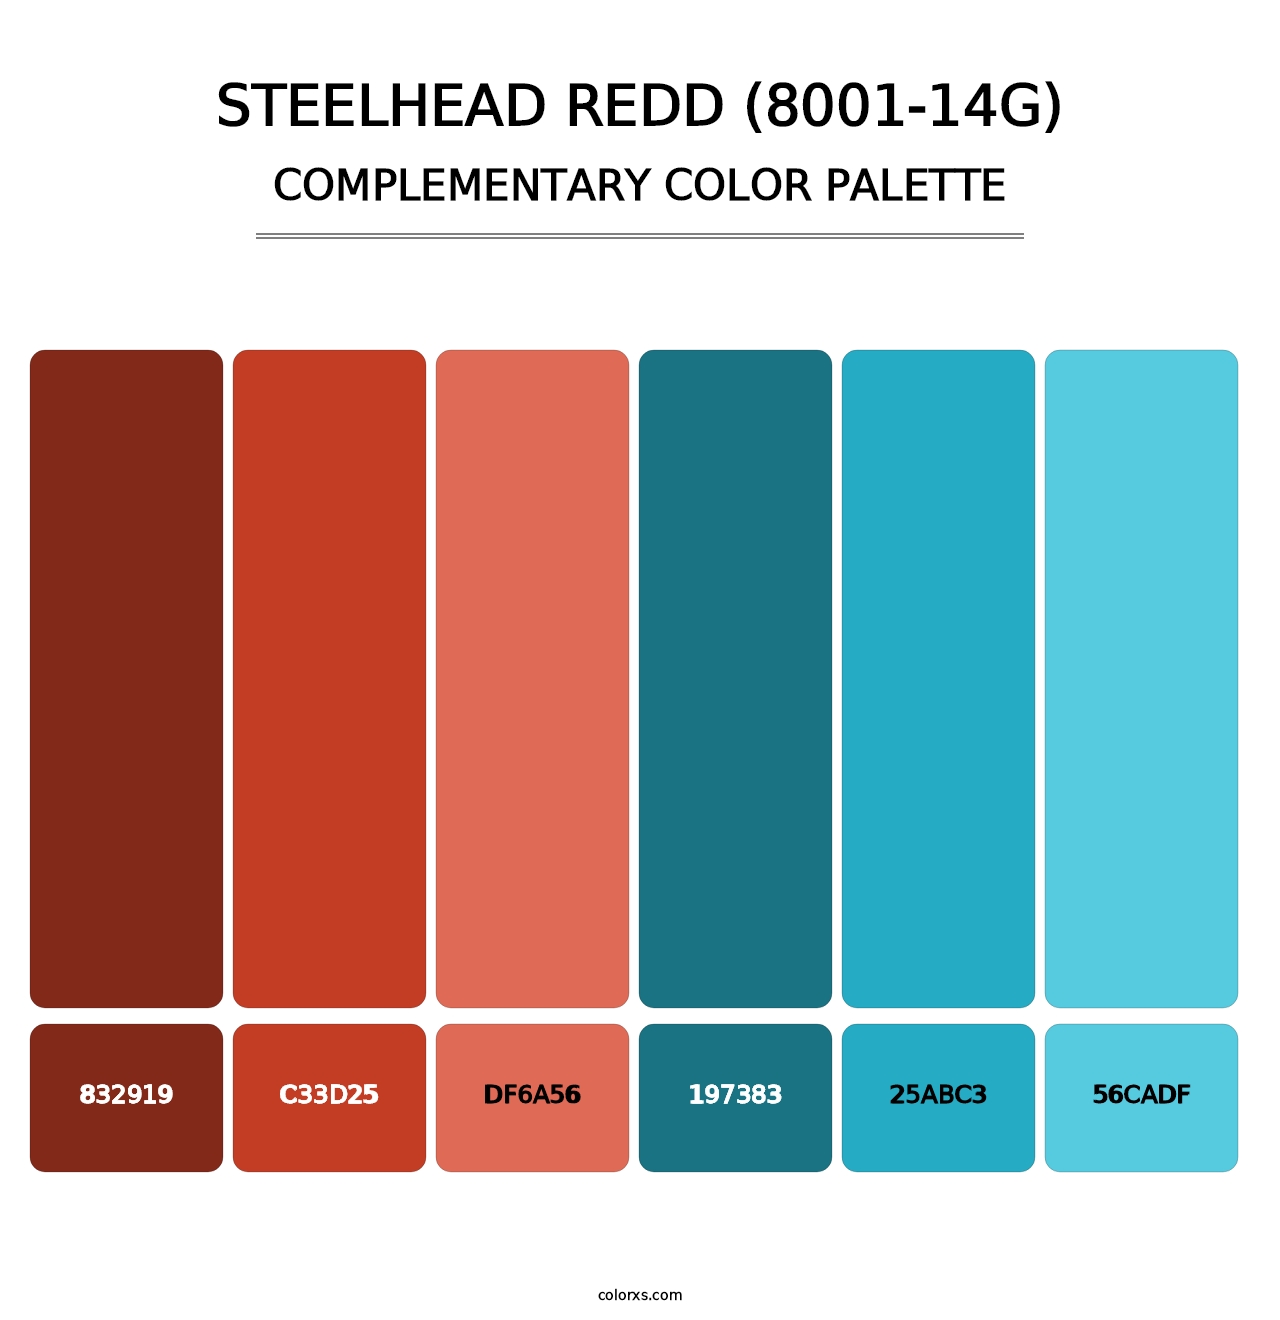 Steelhead Redd (8001-14G) - Complementary Color Palette